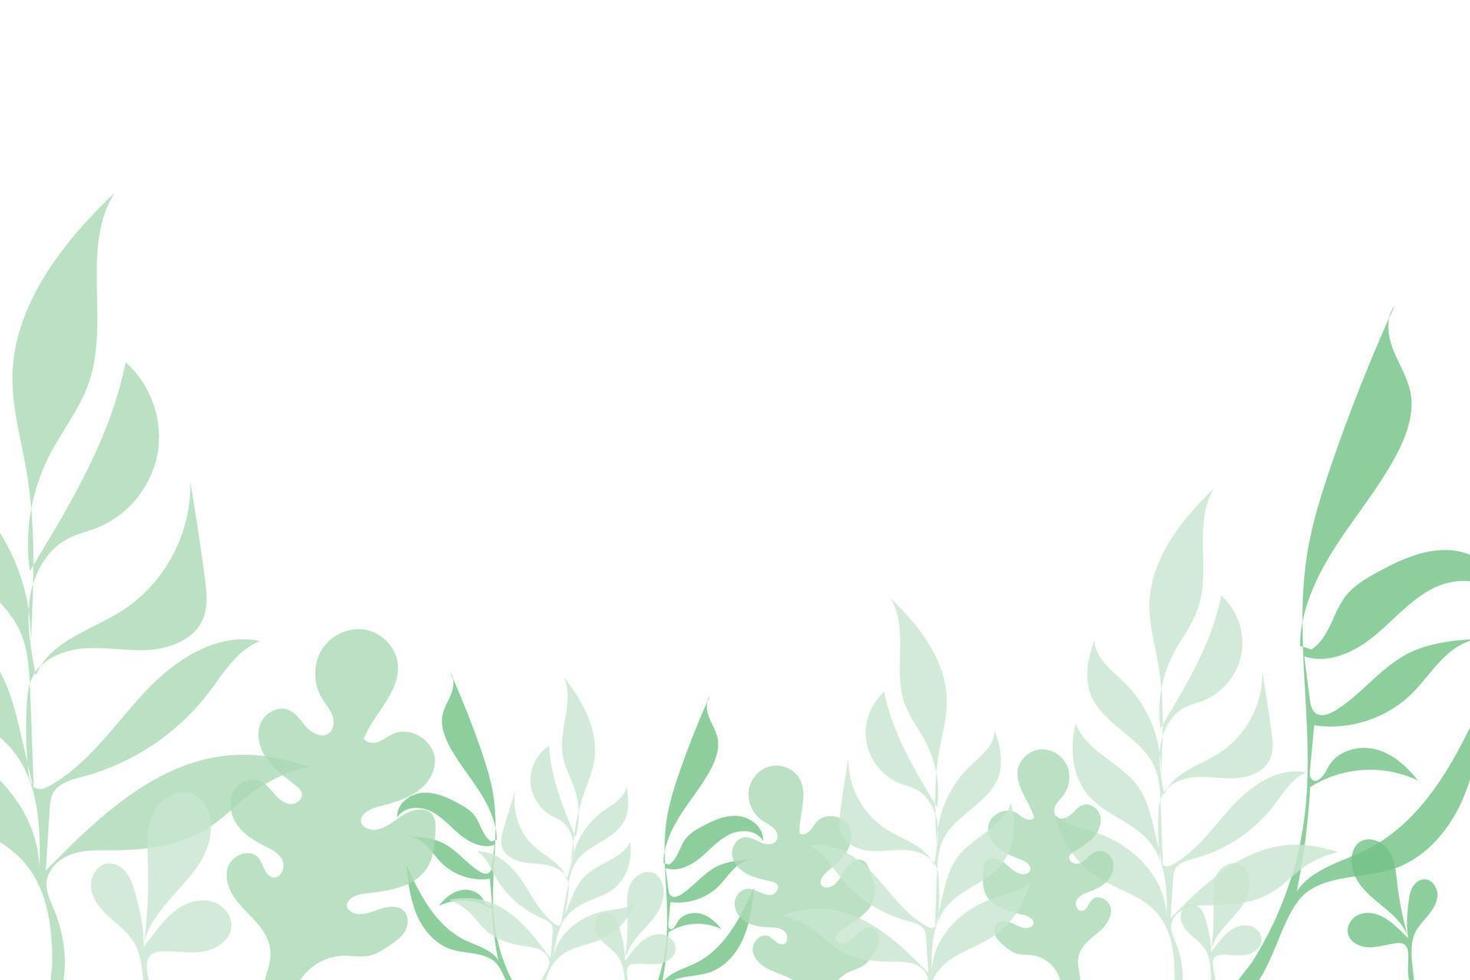 Mint green leaves background, vector illustration.